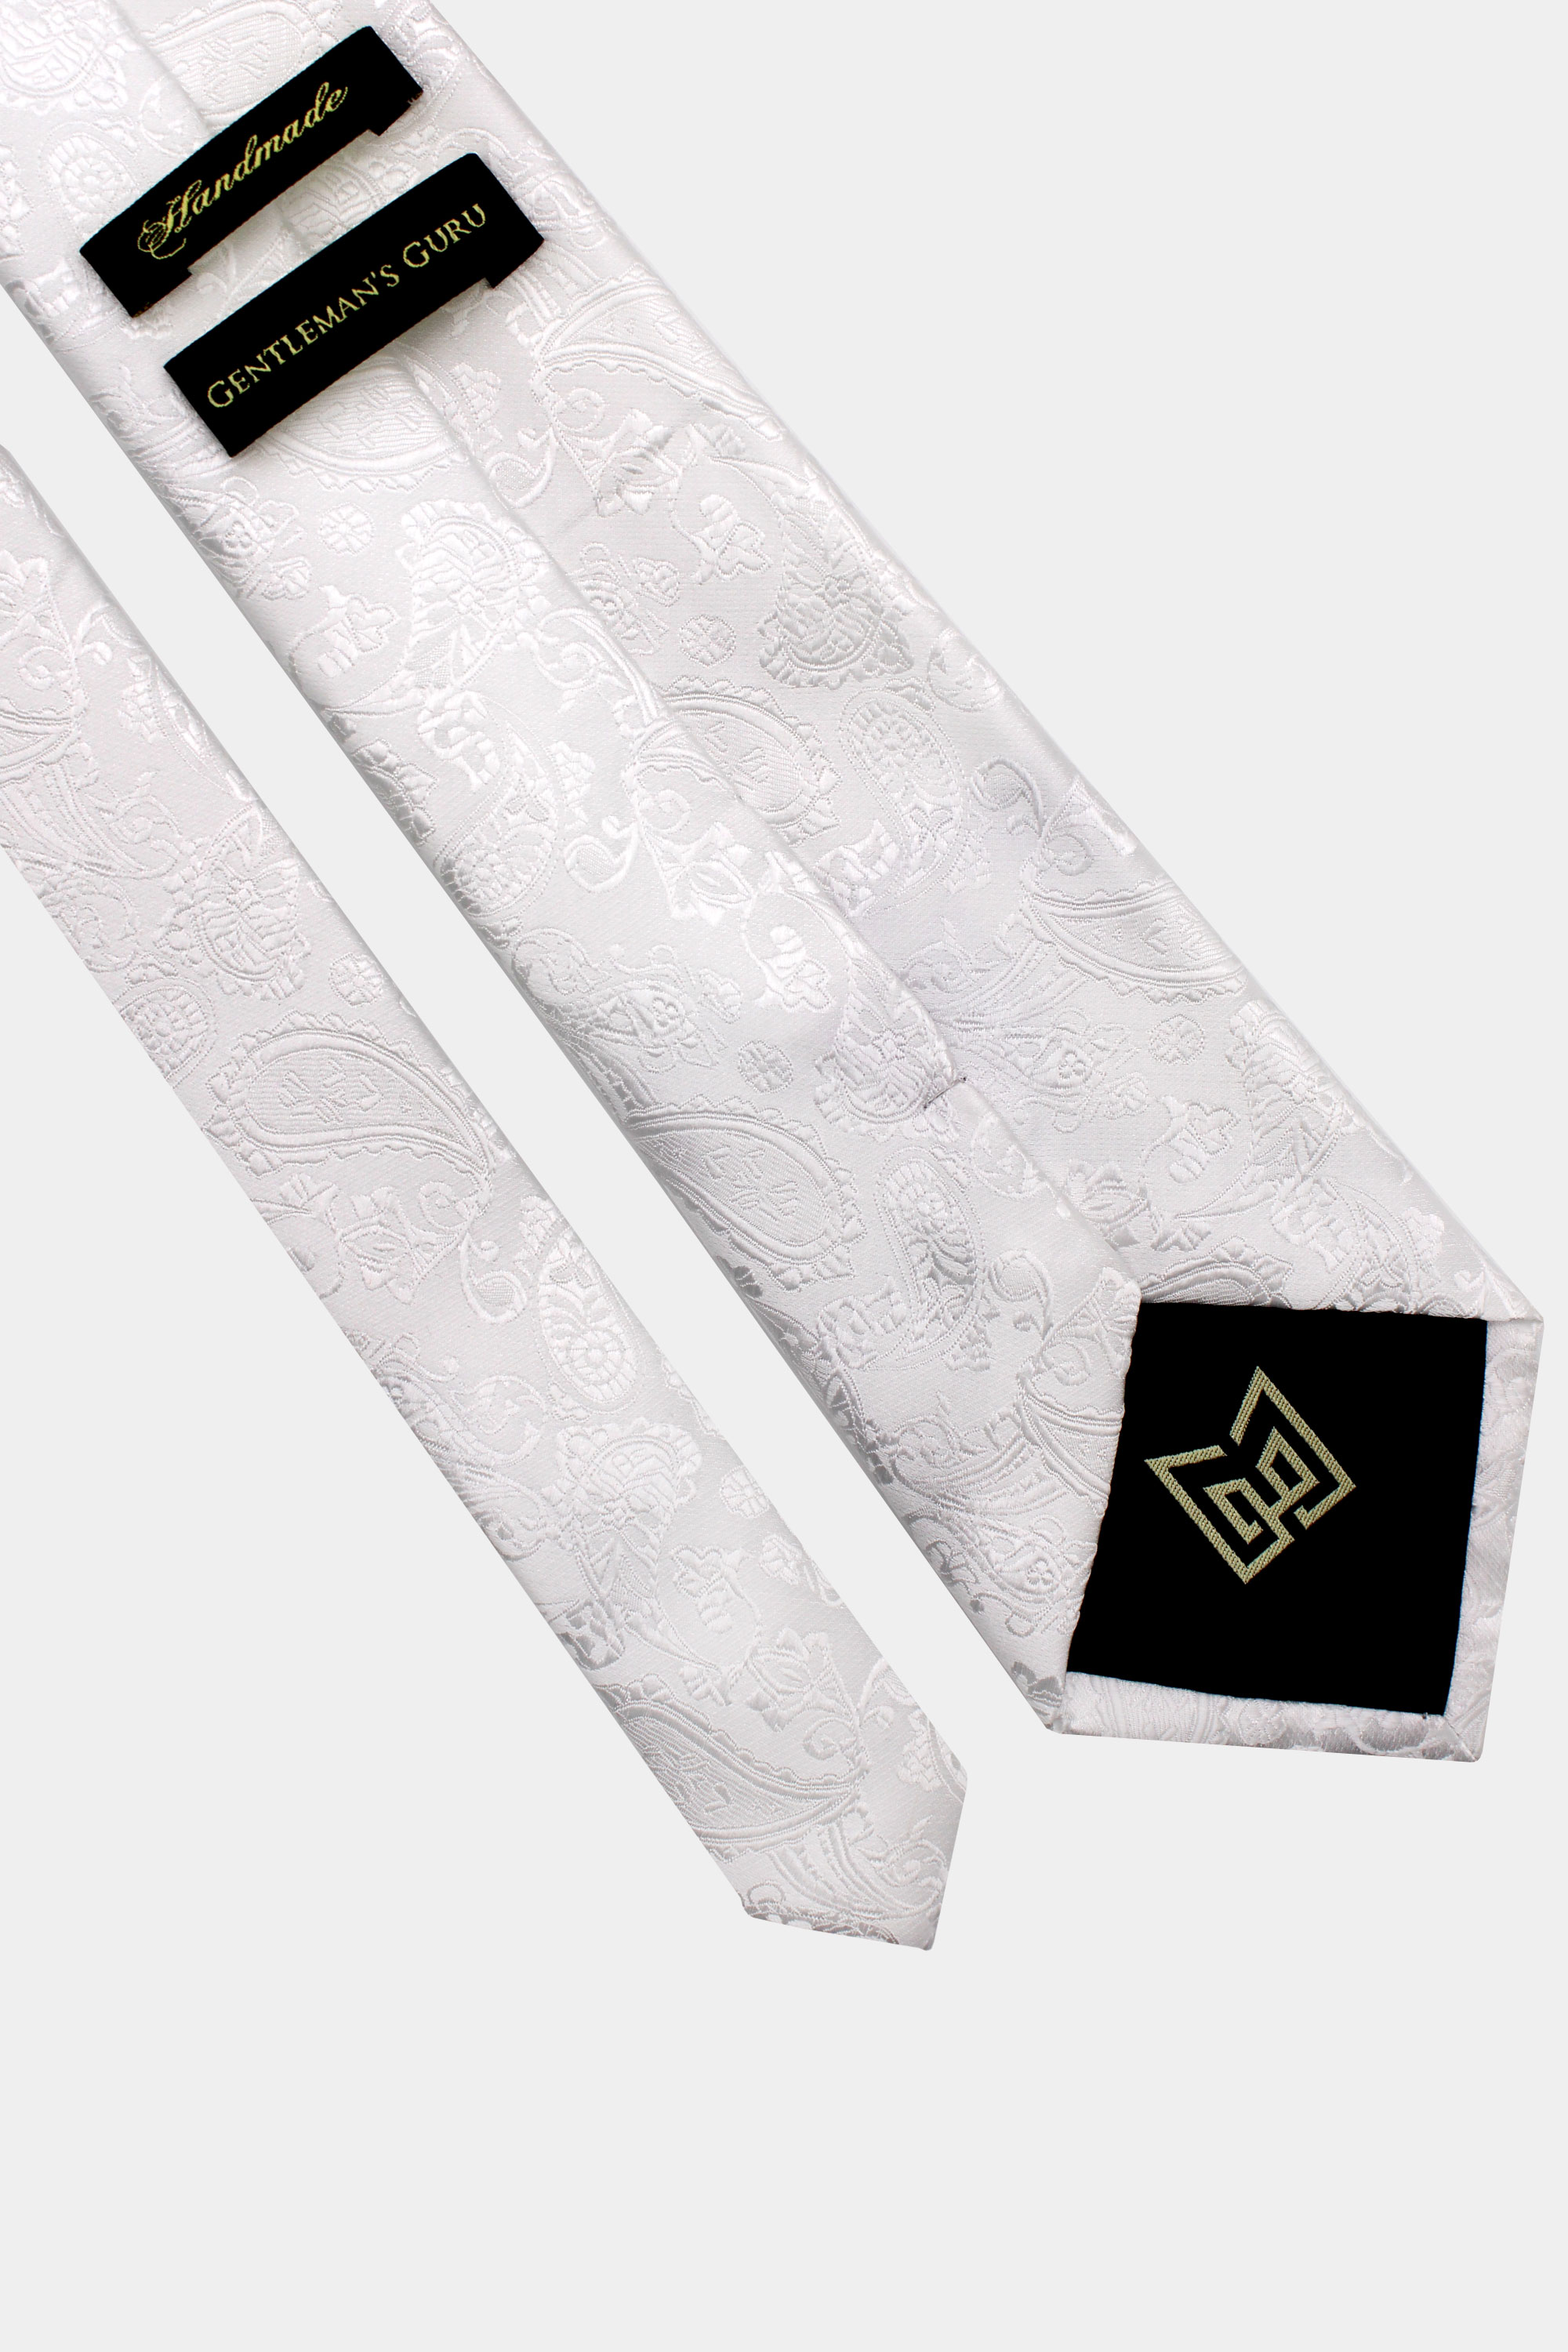 White-Paisley-Tie-from-Gentlemansguru.com